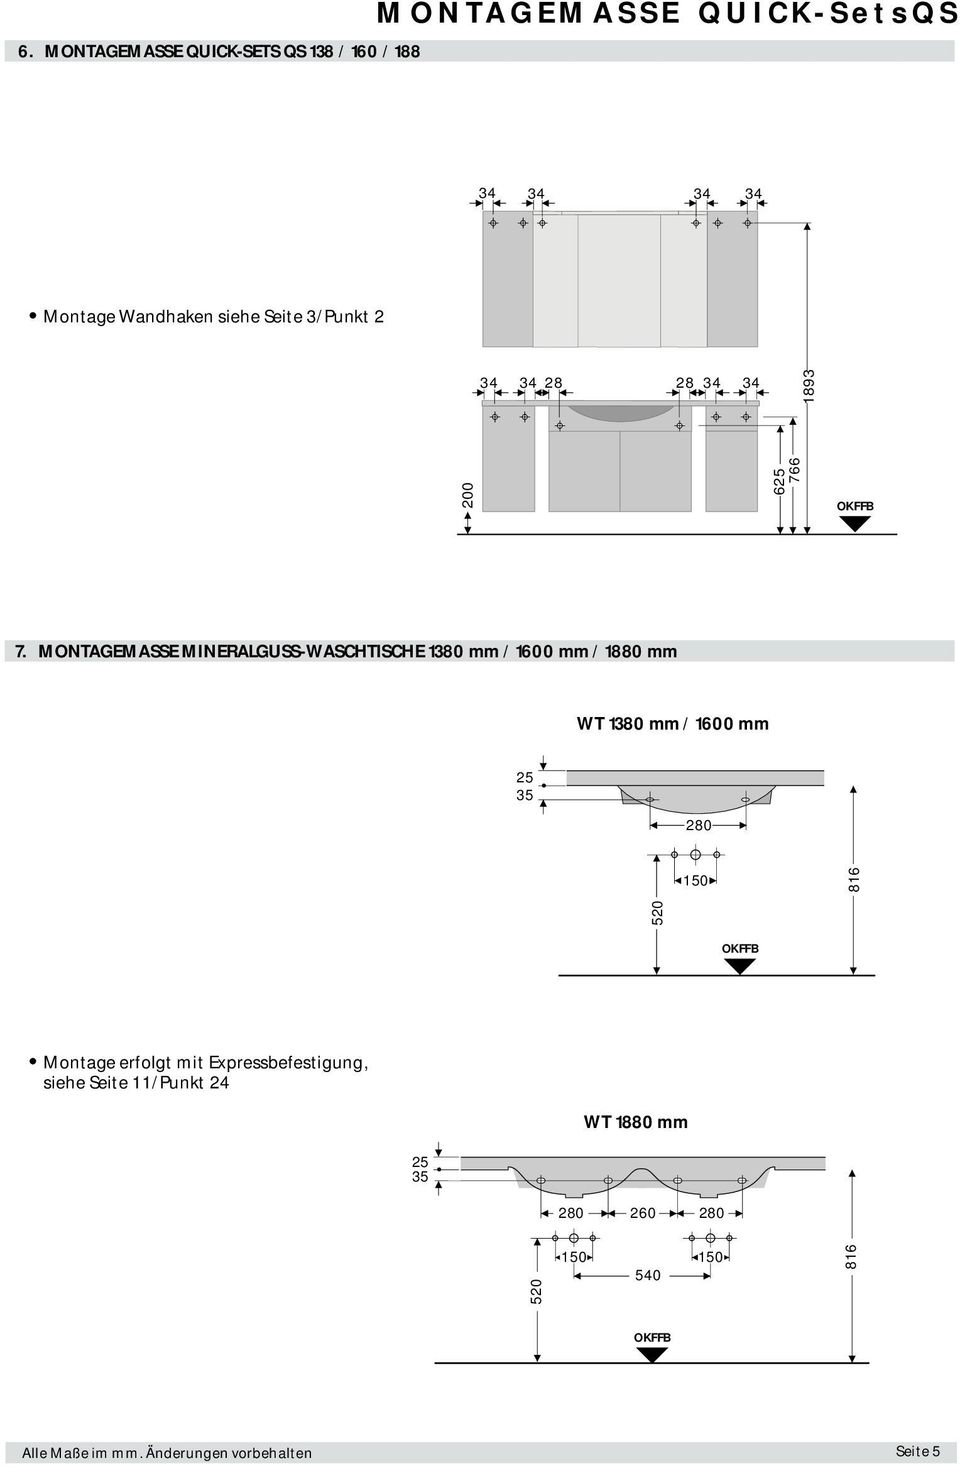 MONTGEMSSE MINERLGUSS-WSHTISHE 1380 mm / 1600 mm / 1880 mm WT 1380 mm / 1600 mm 35 280